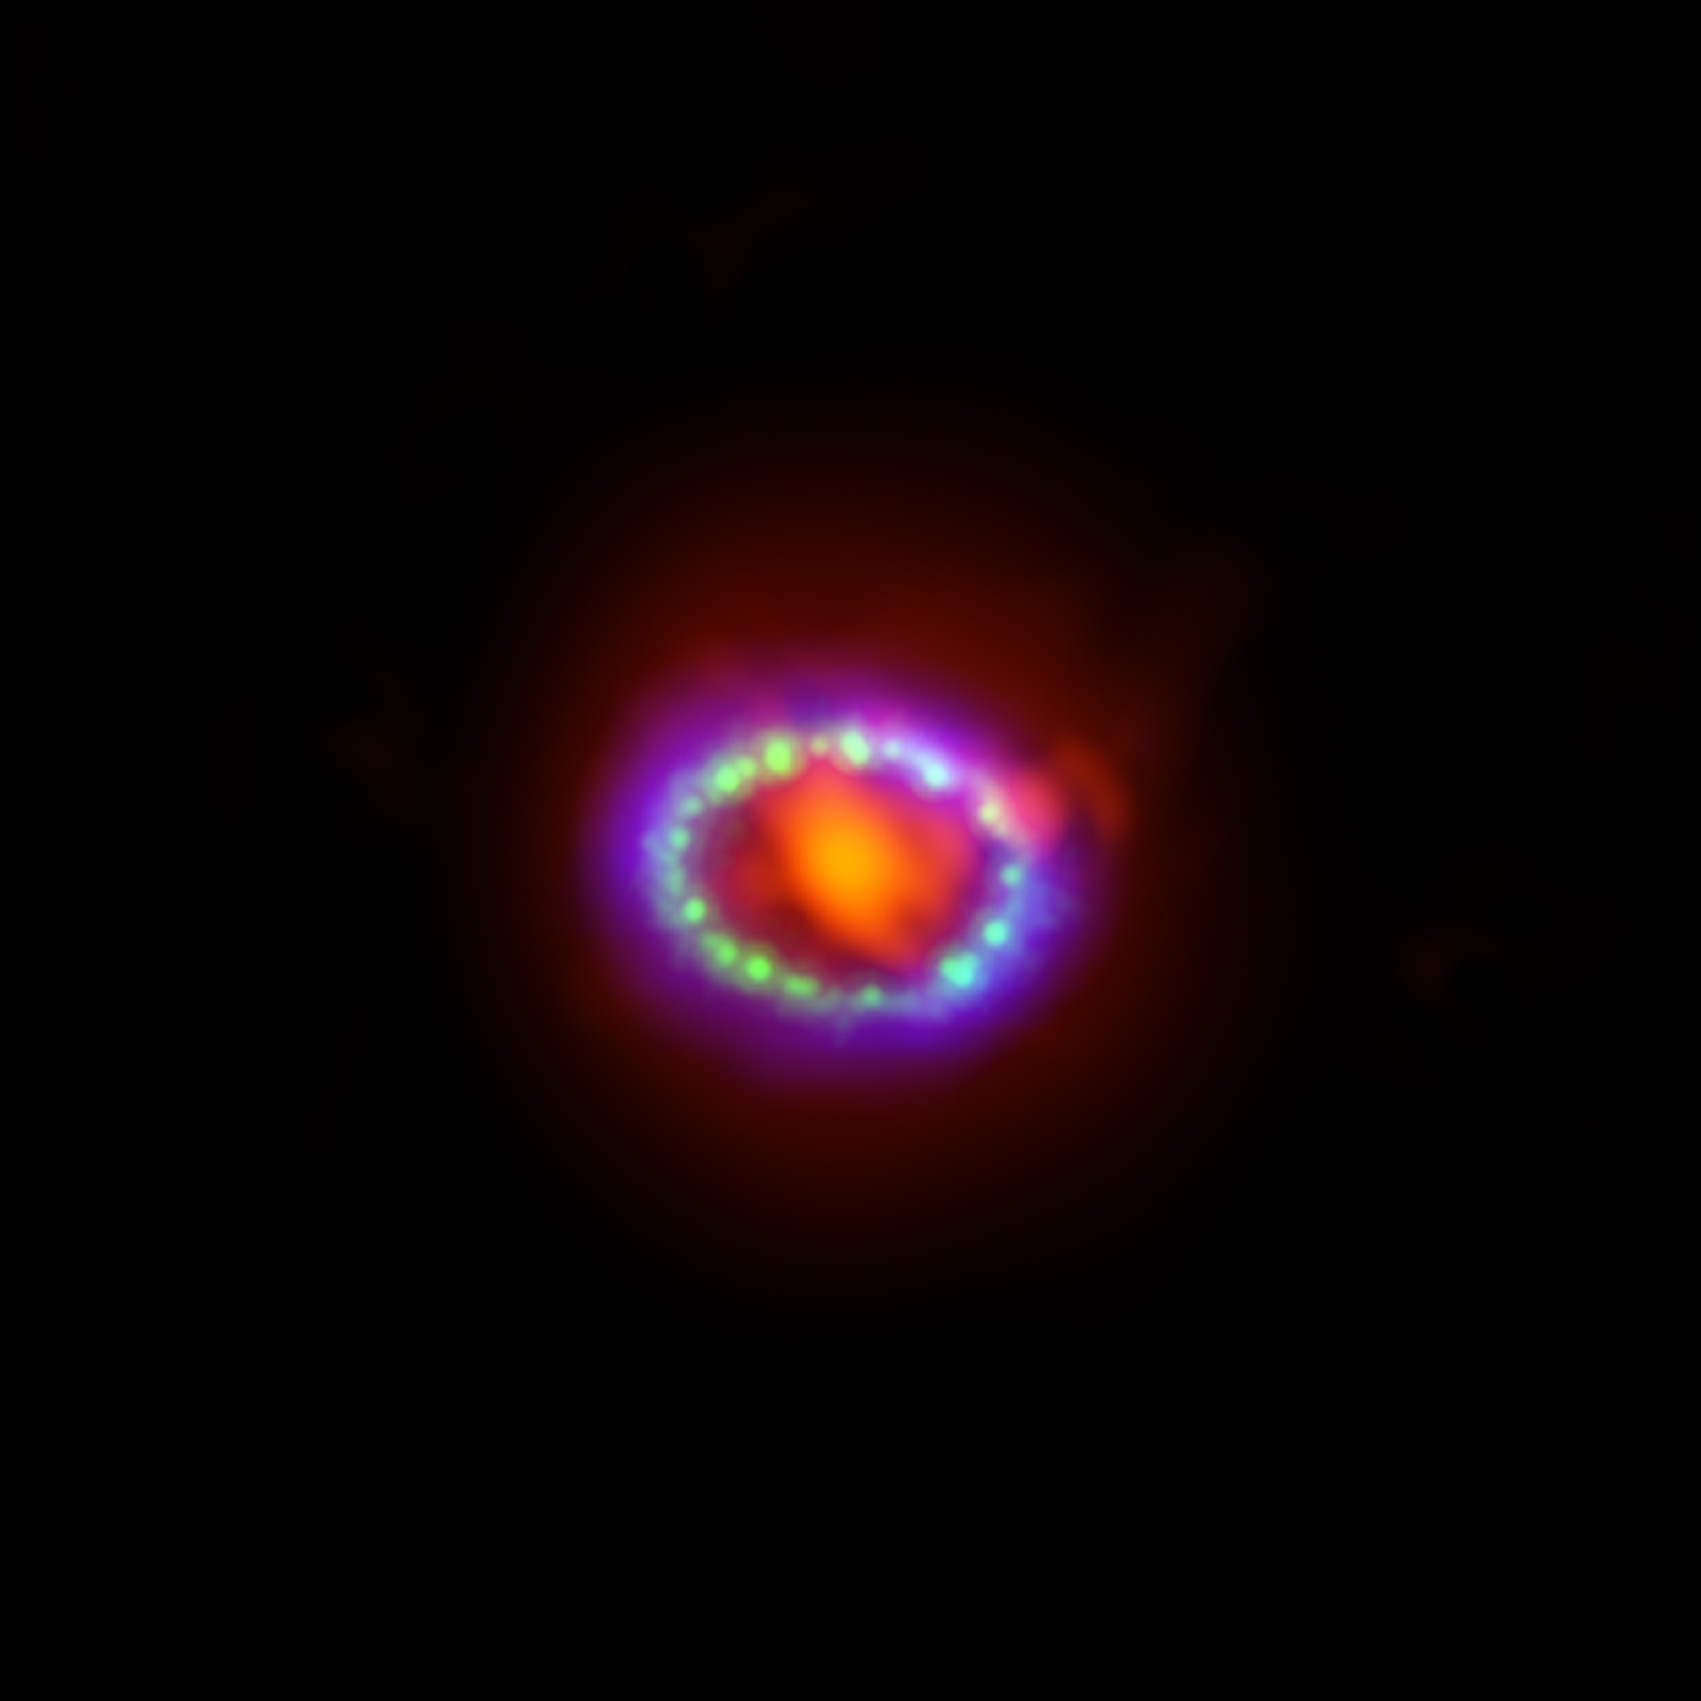 Supernova observation put question mark on speed of light